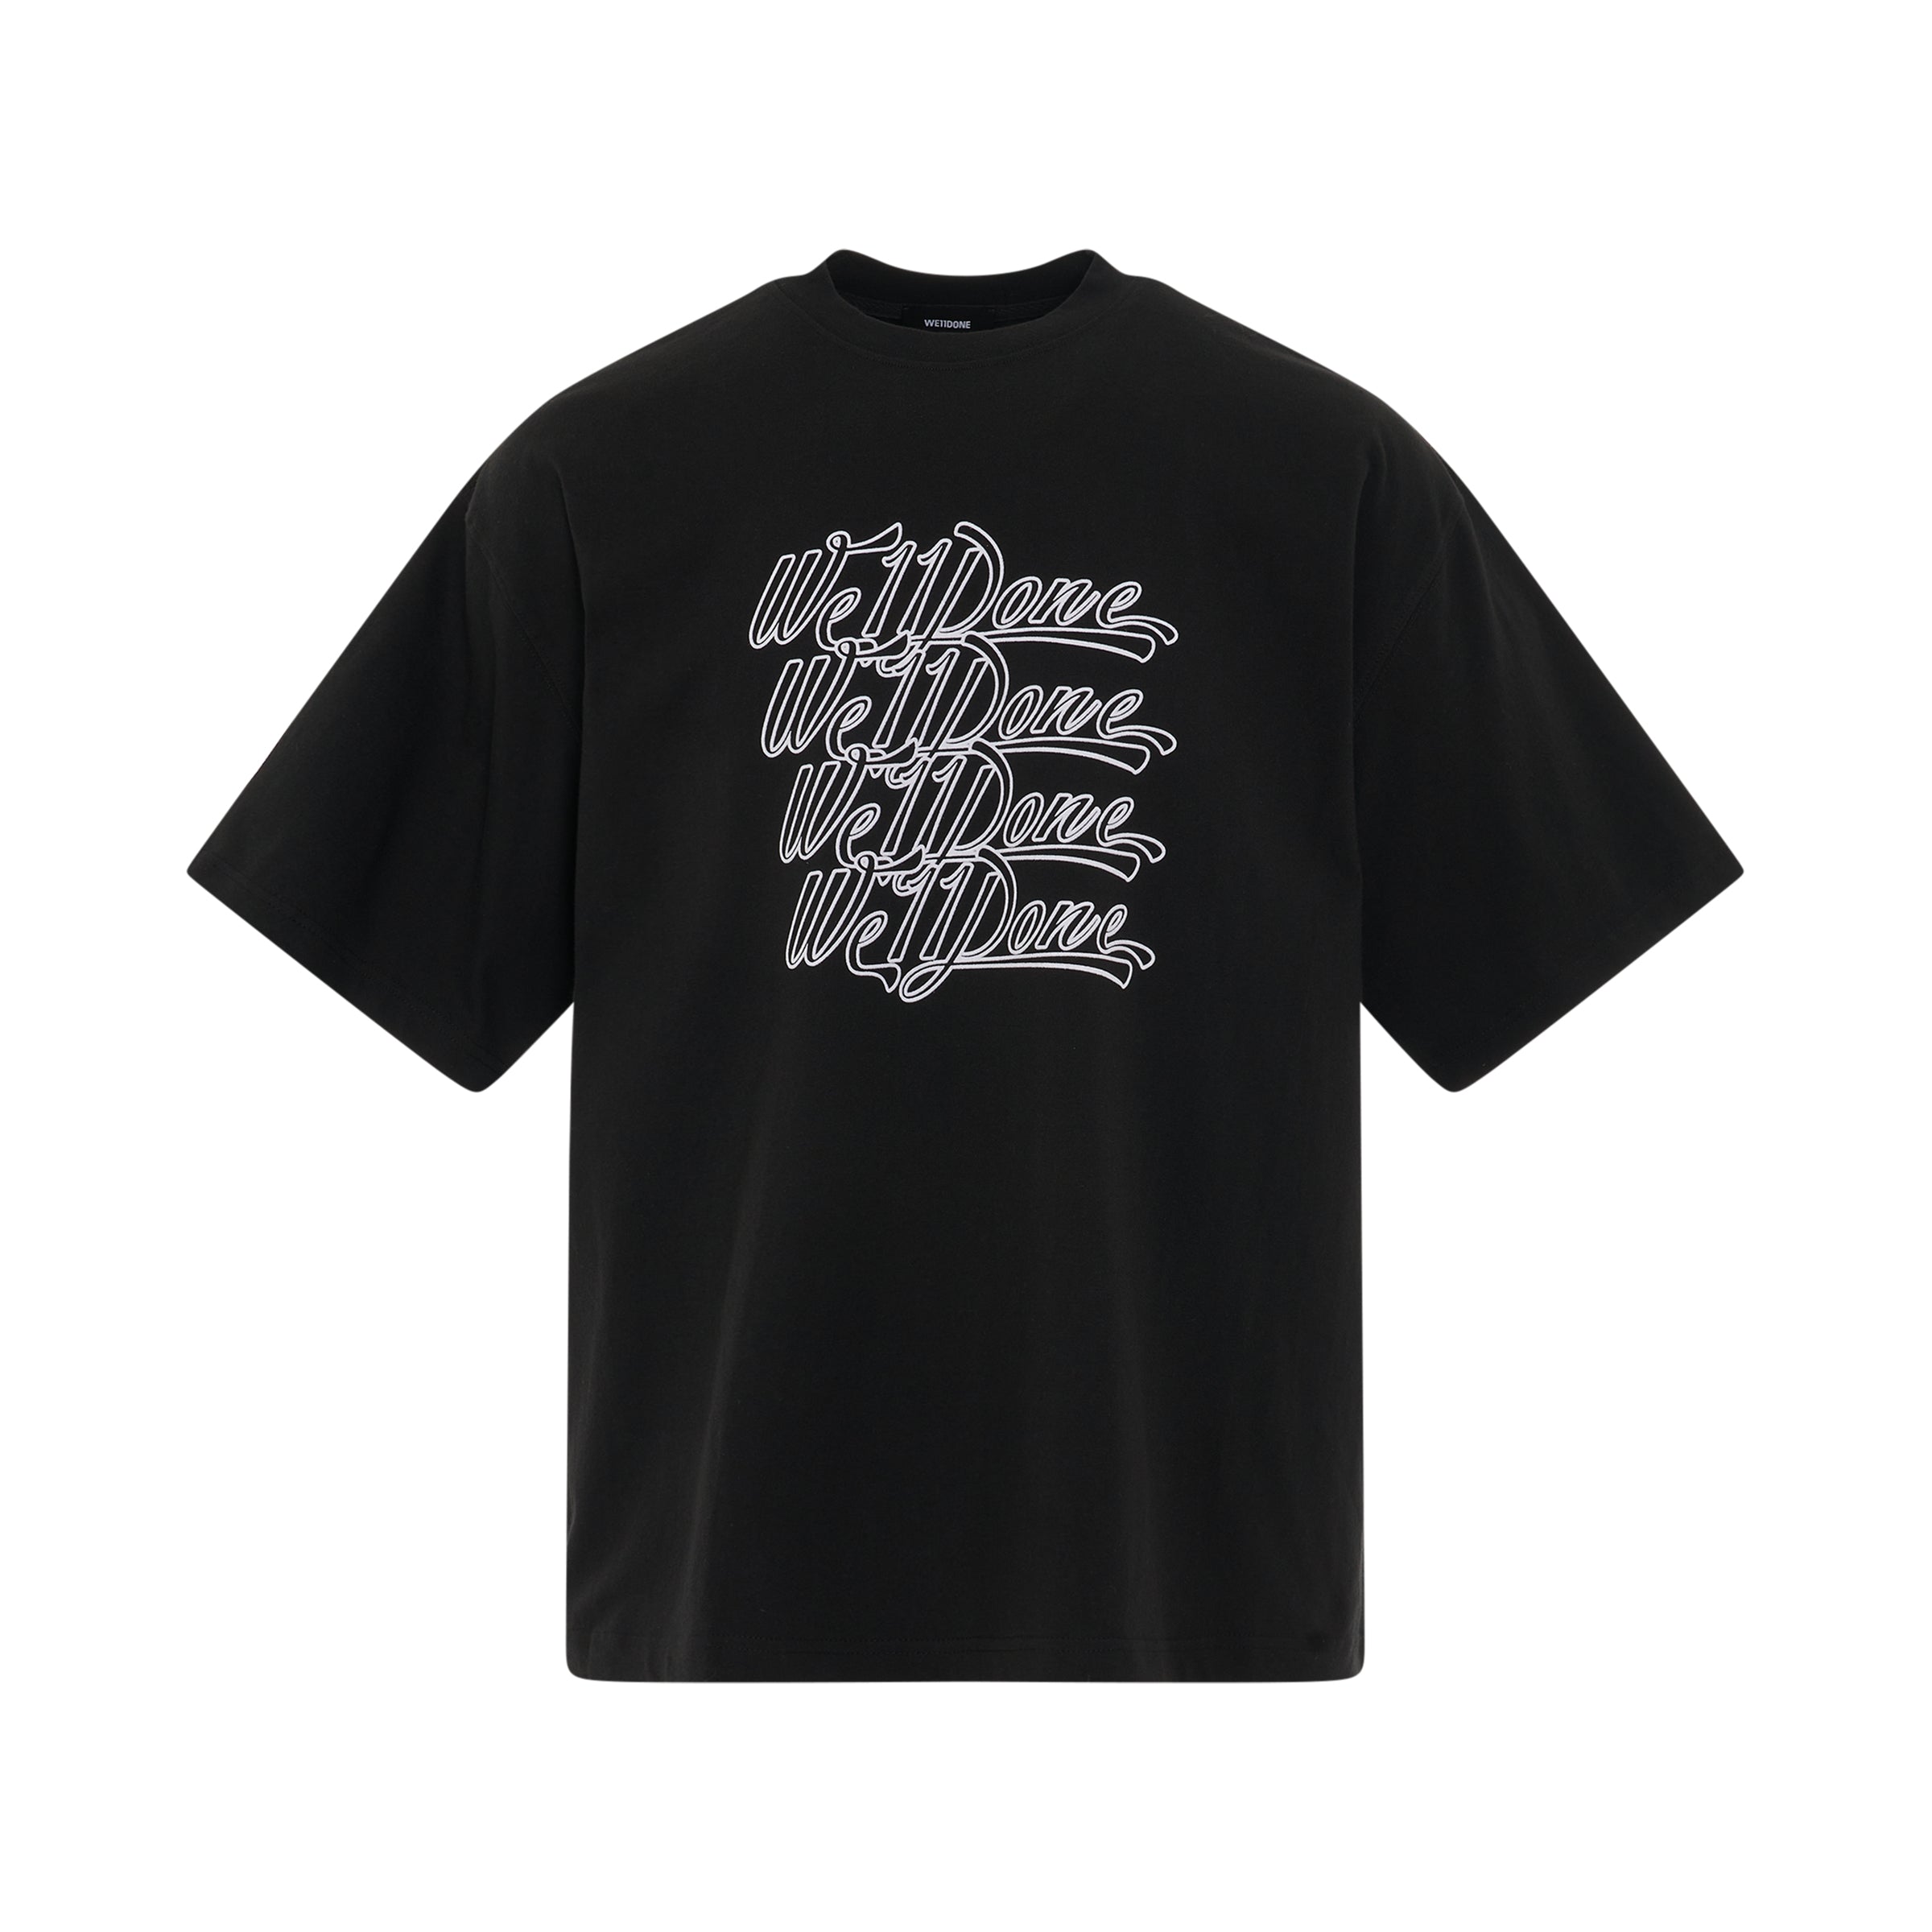 WE11DONE 4 New Logo T-Shirt in Black – MARAIS